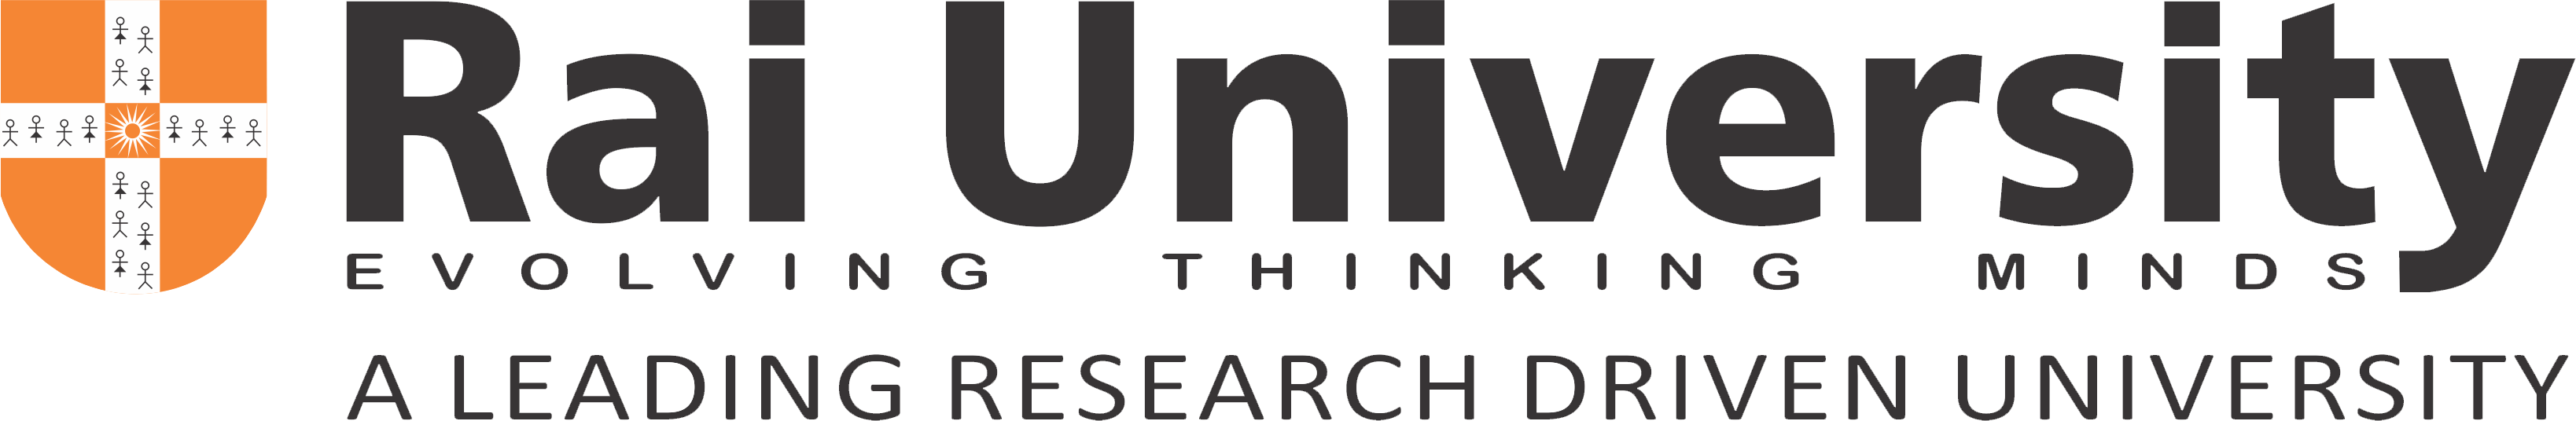 RAI UNIVERSITY-logo